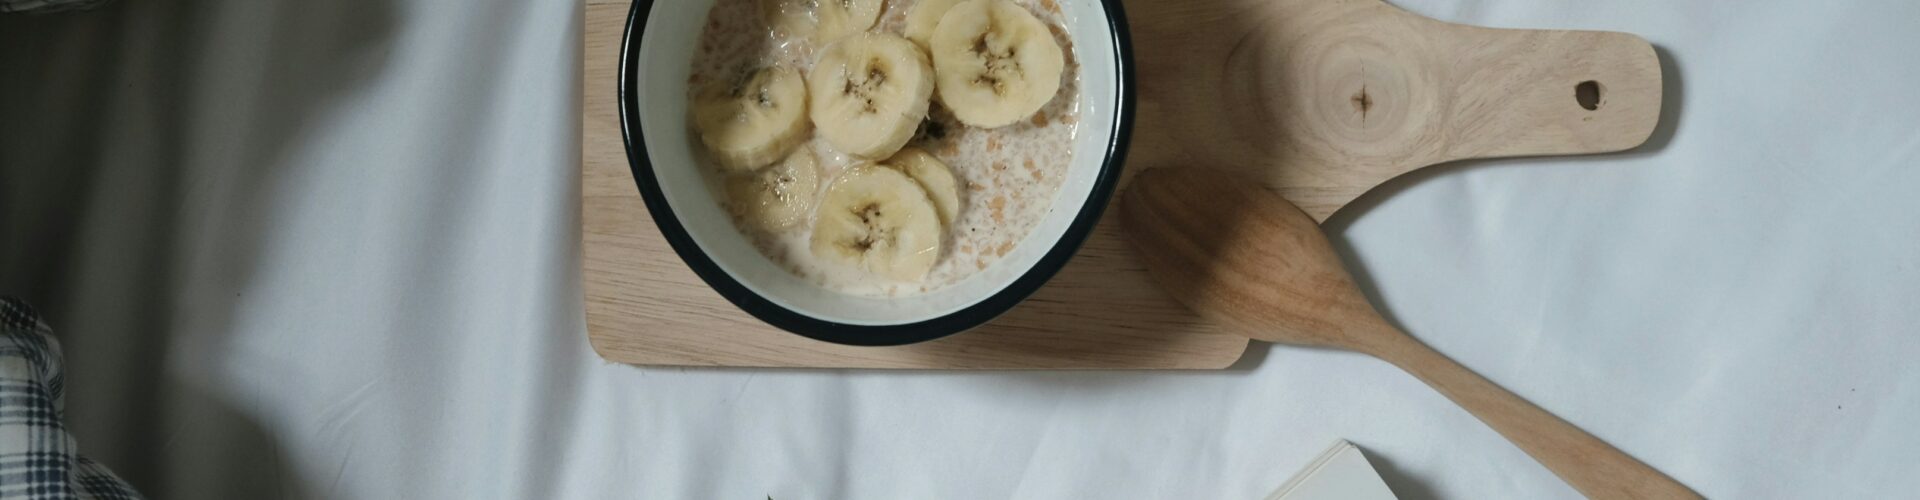 health and wellness porridge recipe yoga retreat